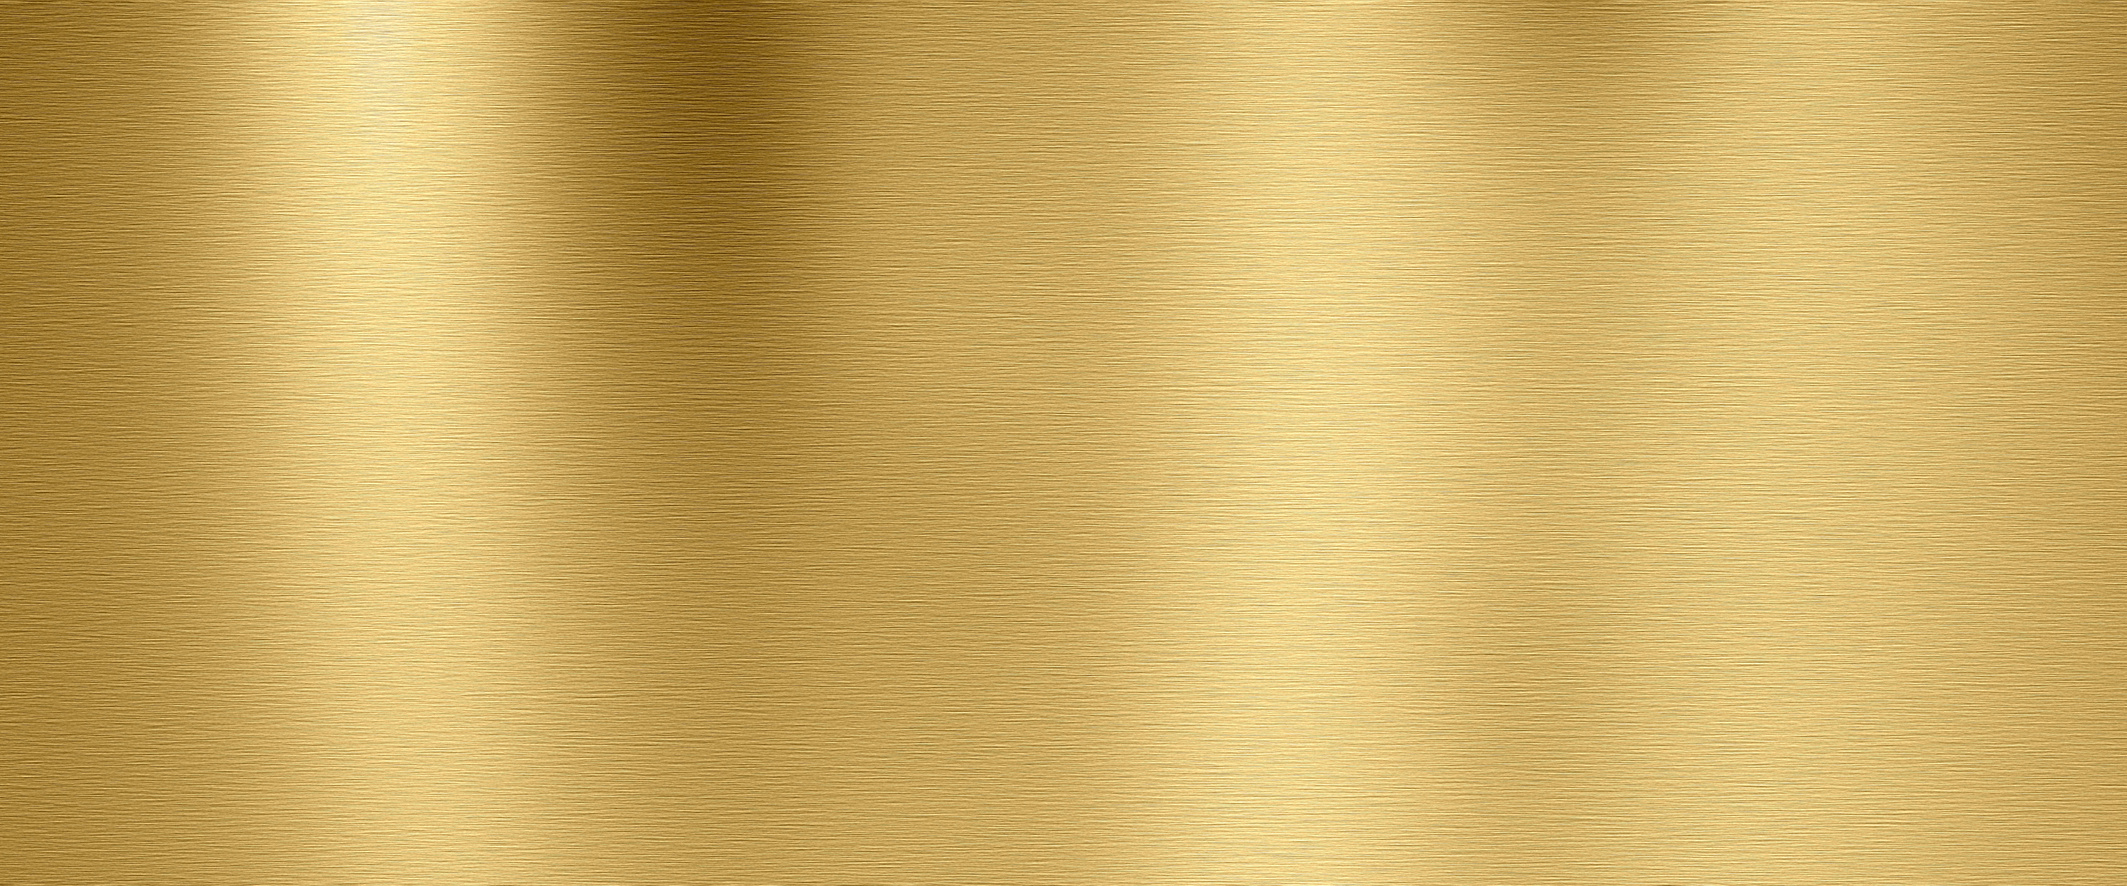 Golden shiny metal texture